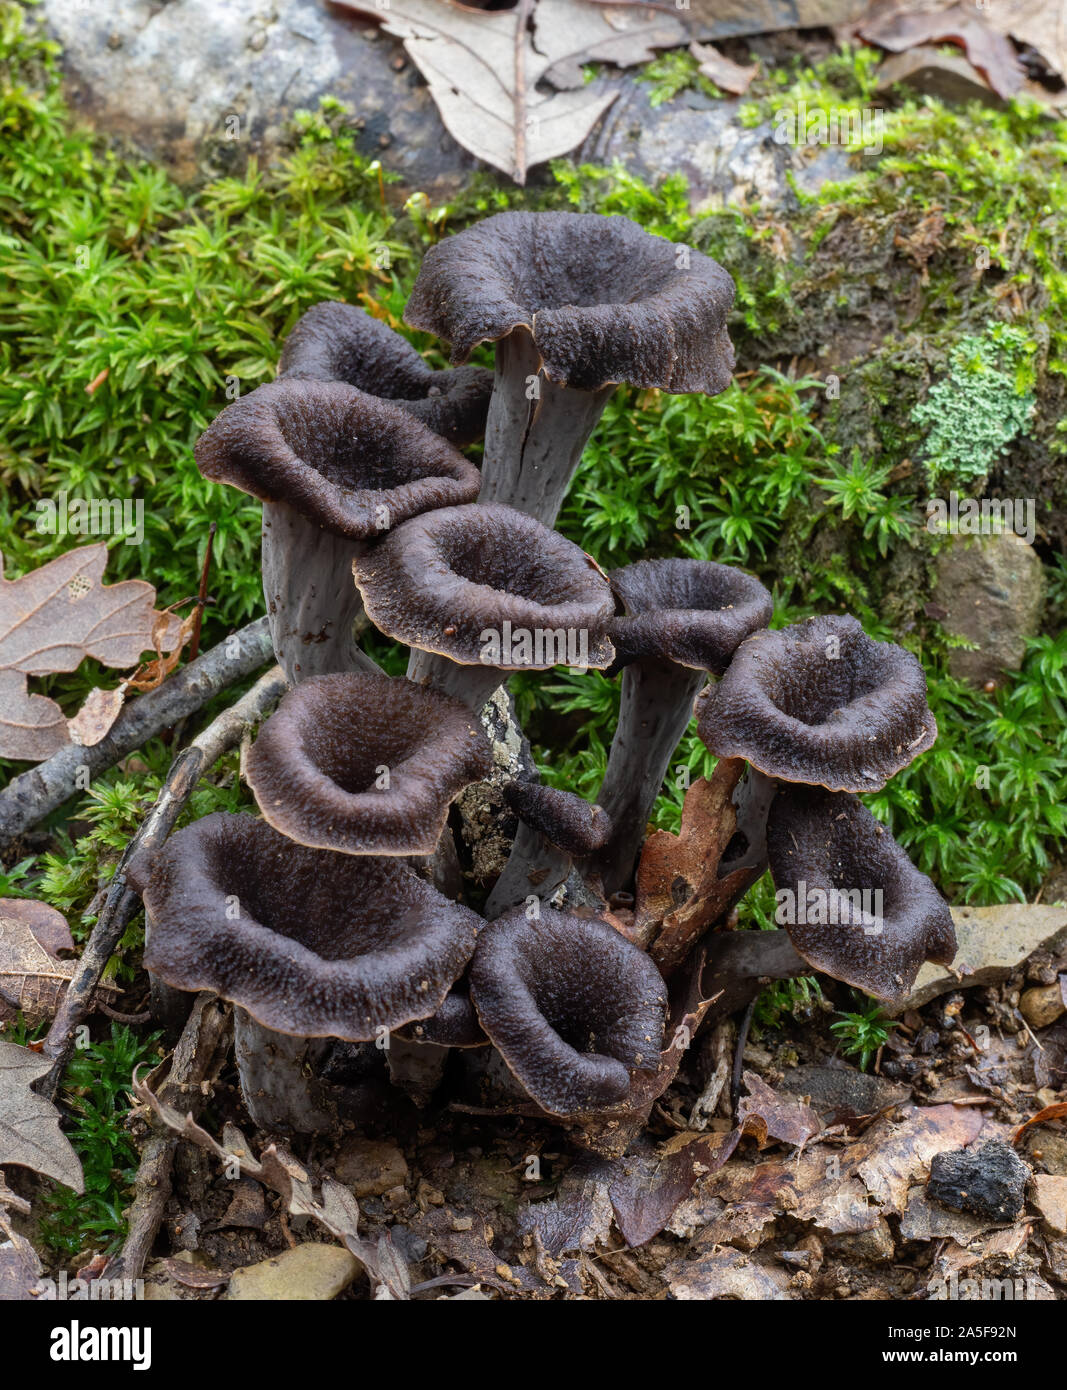 Craterellus cornucopioides edible mushrooms growing in nature. Aka Horn of plenty, black chanterelle, black trumpet etc. Stock Photo